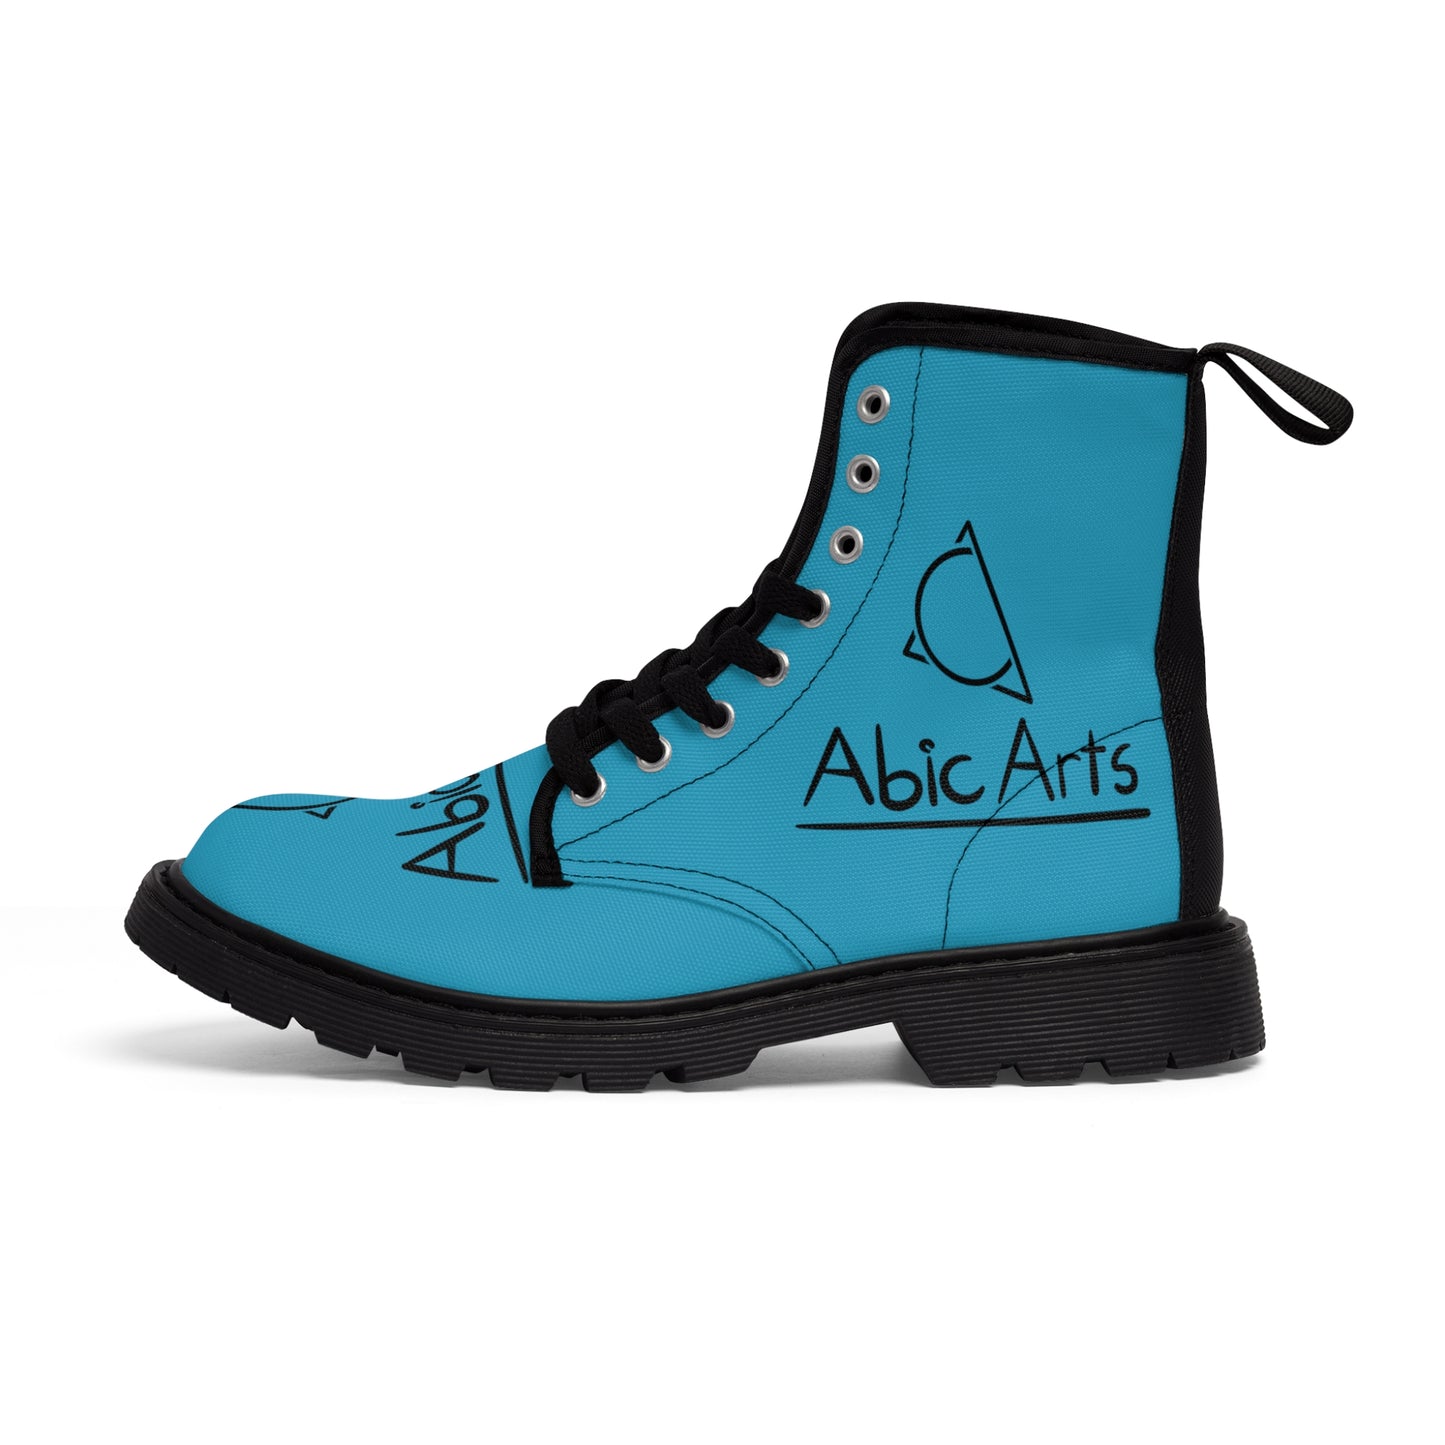 Women's Canvas Boots  "Abic Arts Studio 2.0"